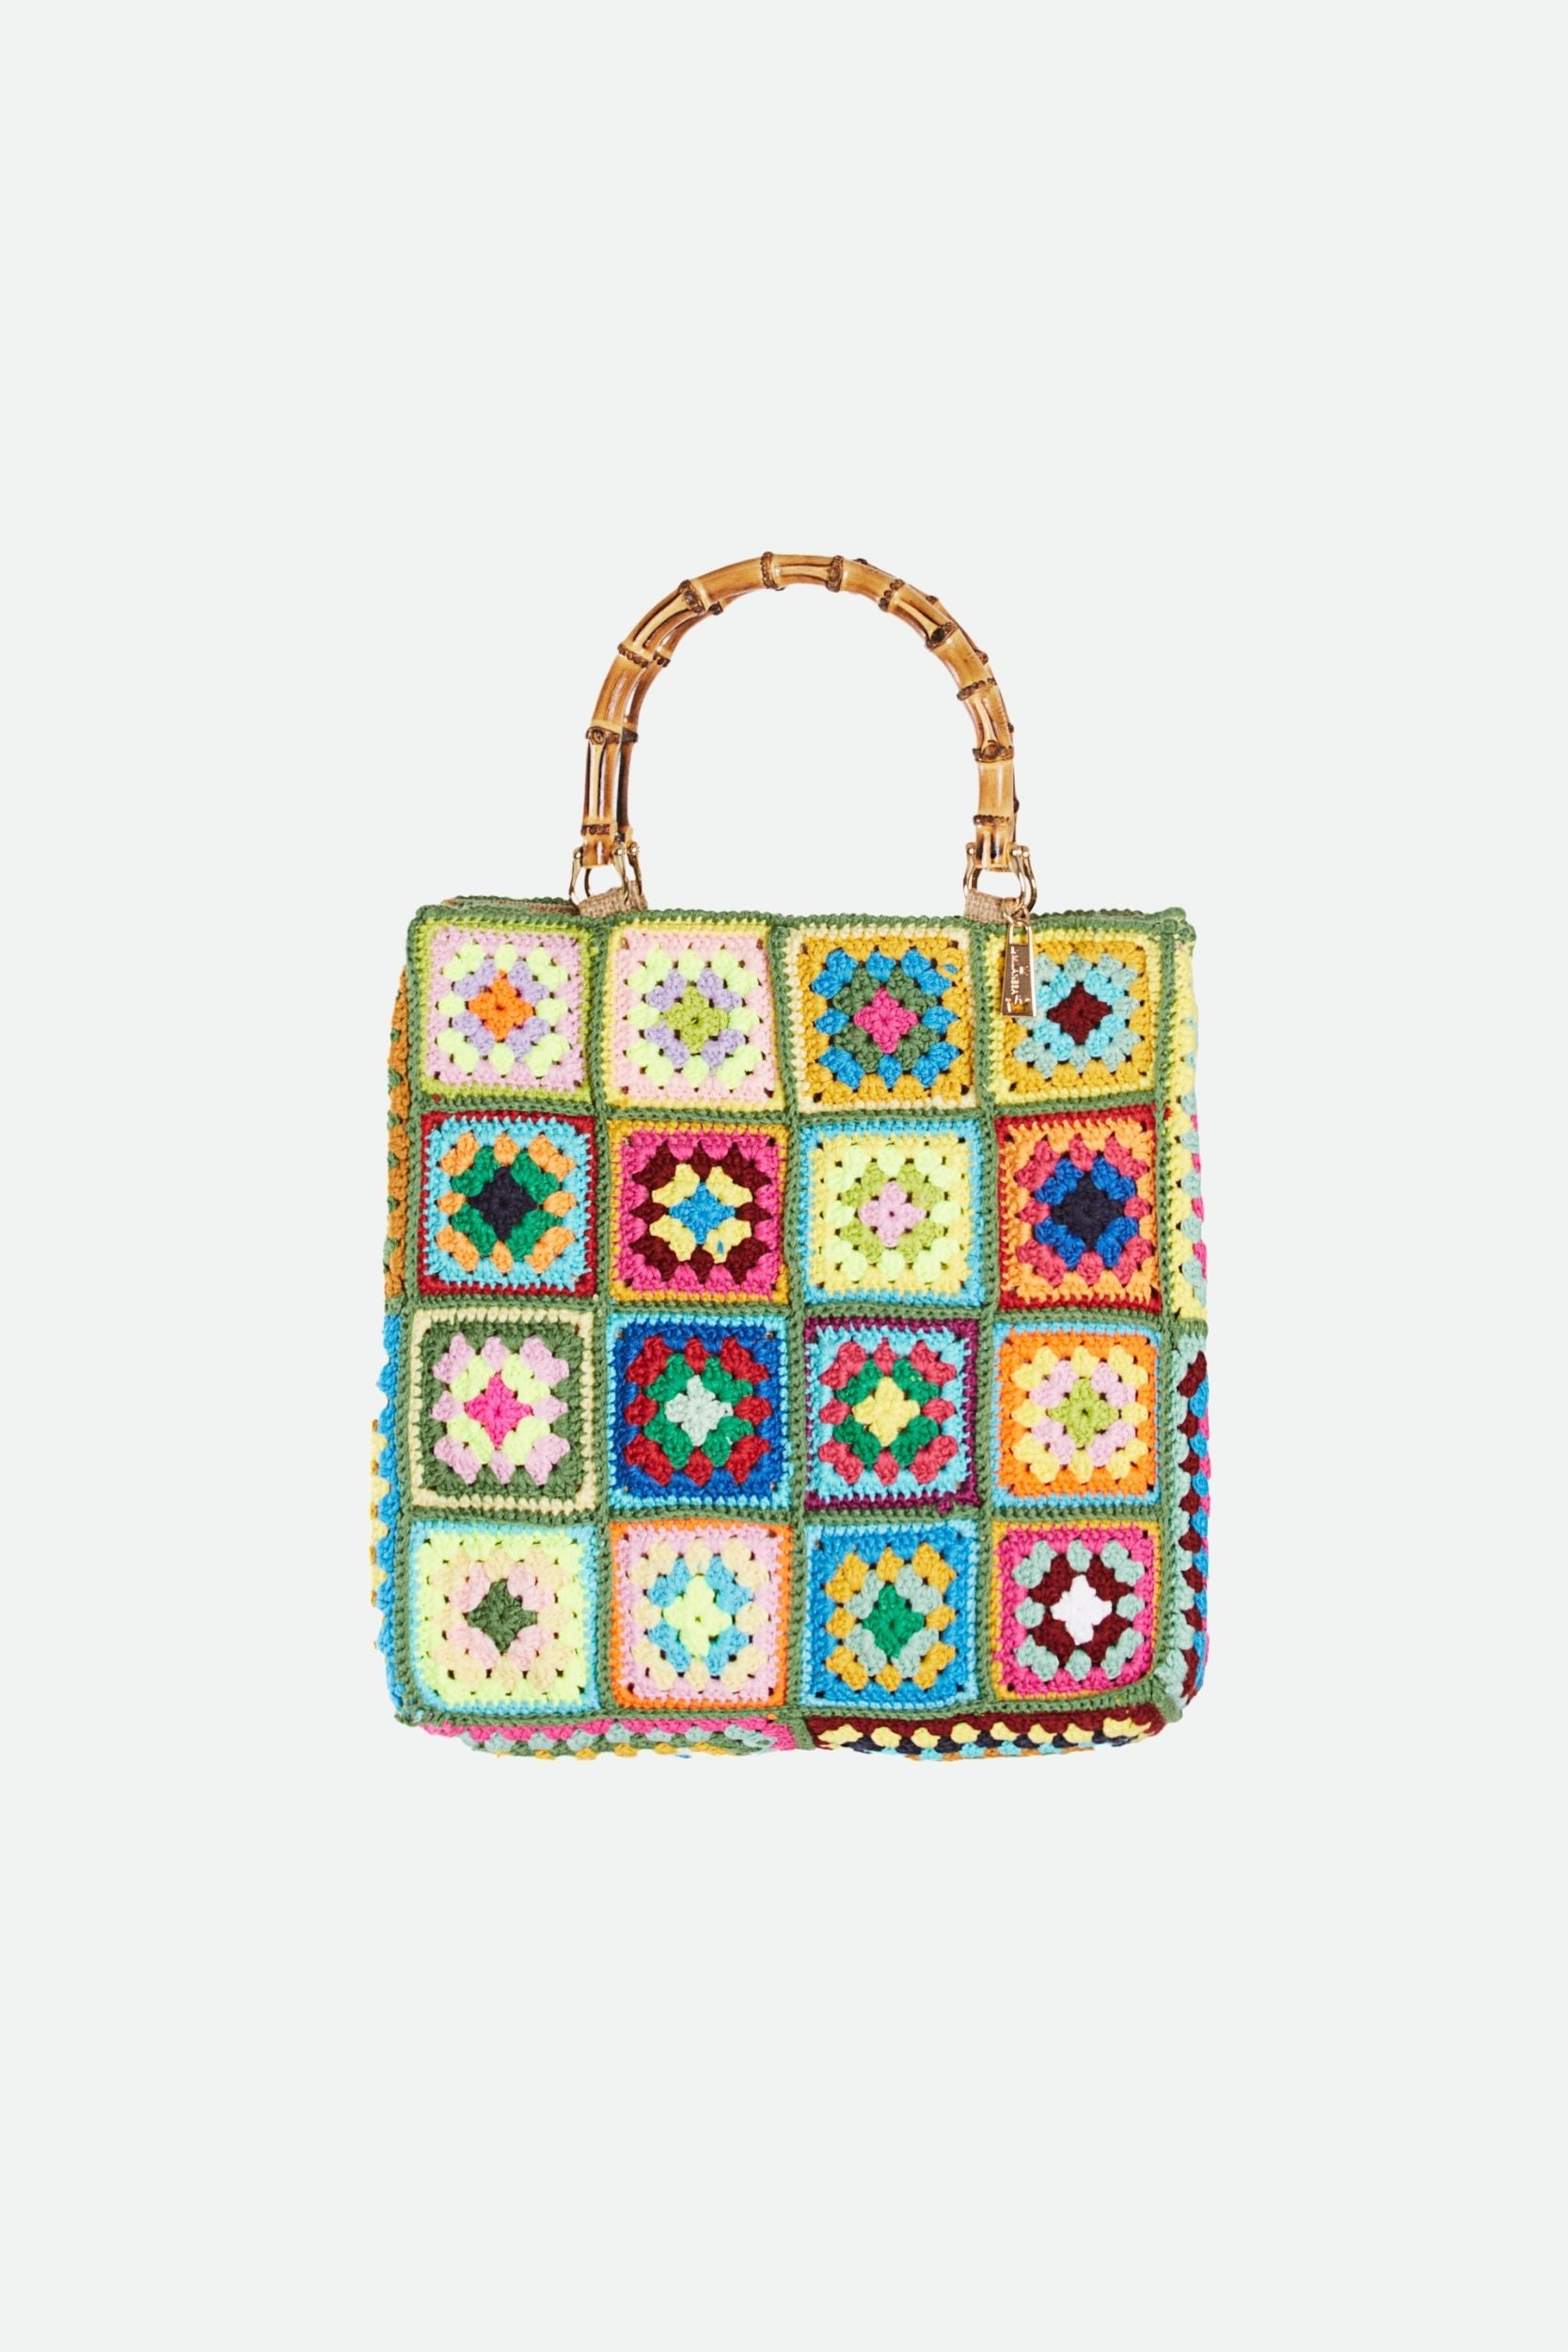 La Milanesa Large Green Crochet Bag